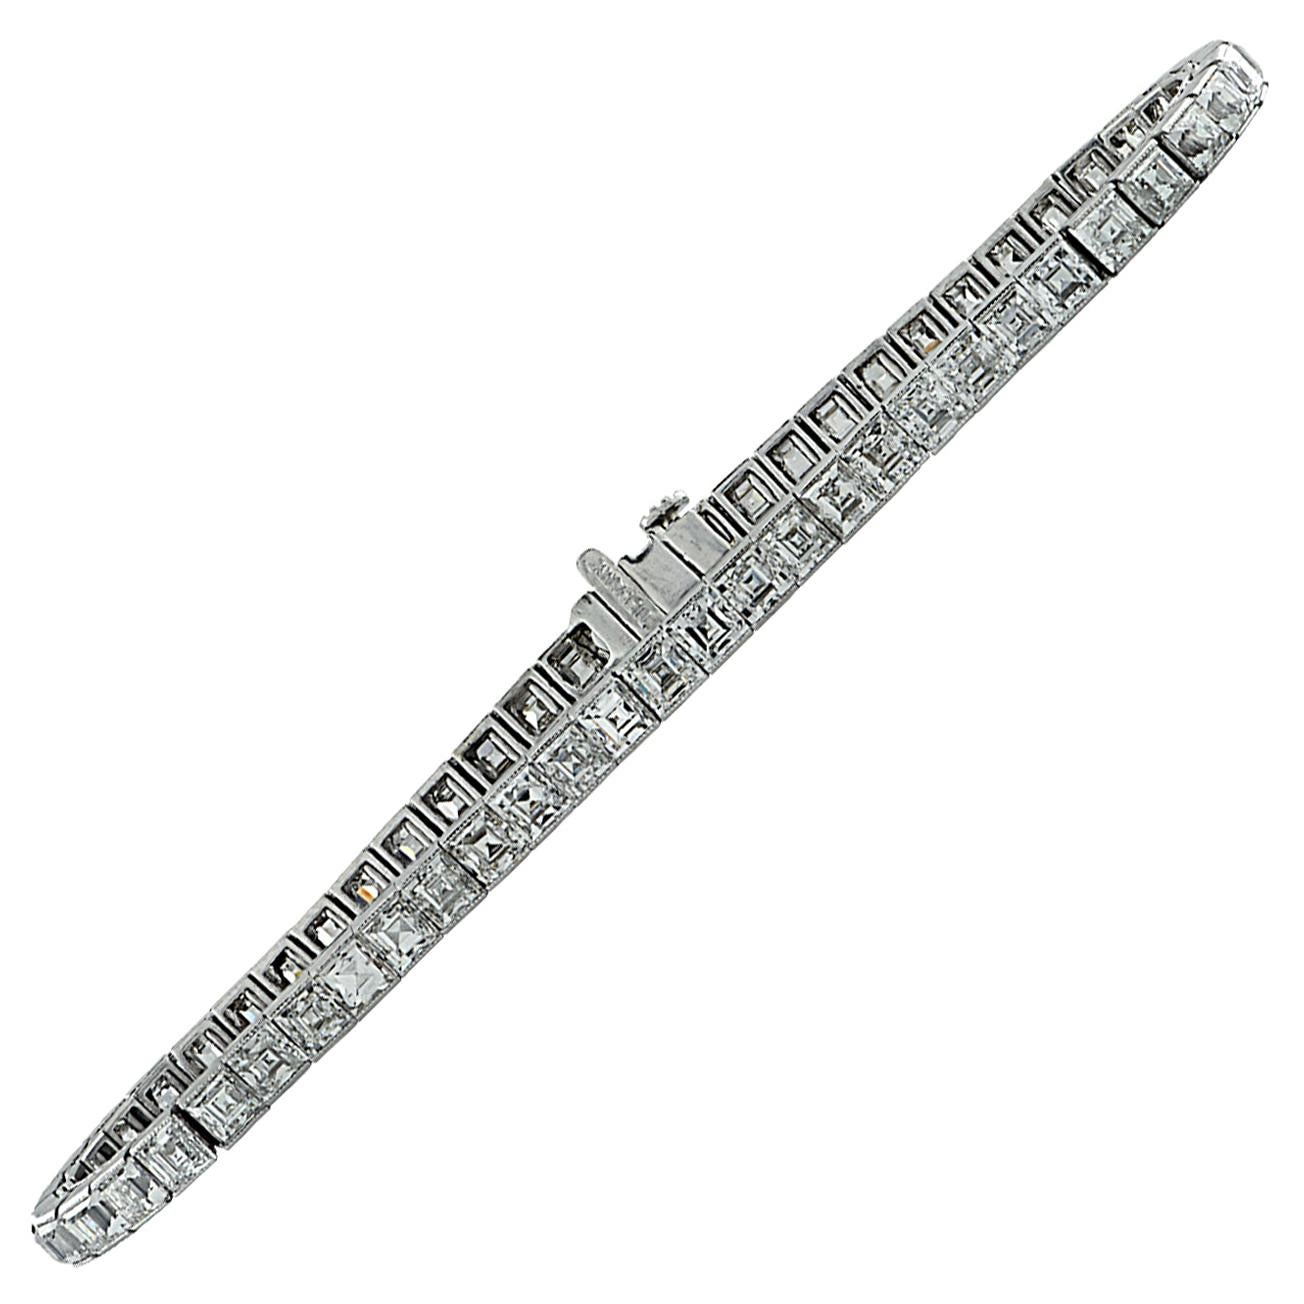 Circa 1920 Art Deco Tiffany & Co. 8.25 Carat Carre Cut Diamond Tennis Bracelet